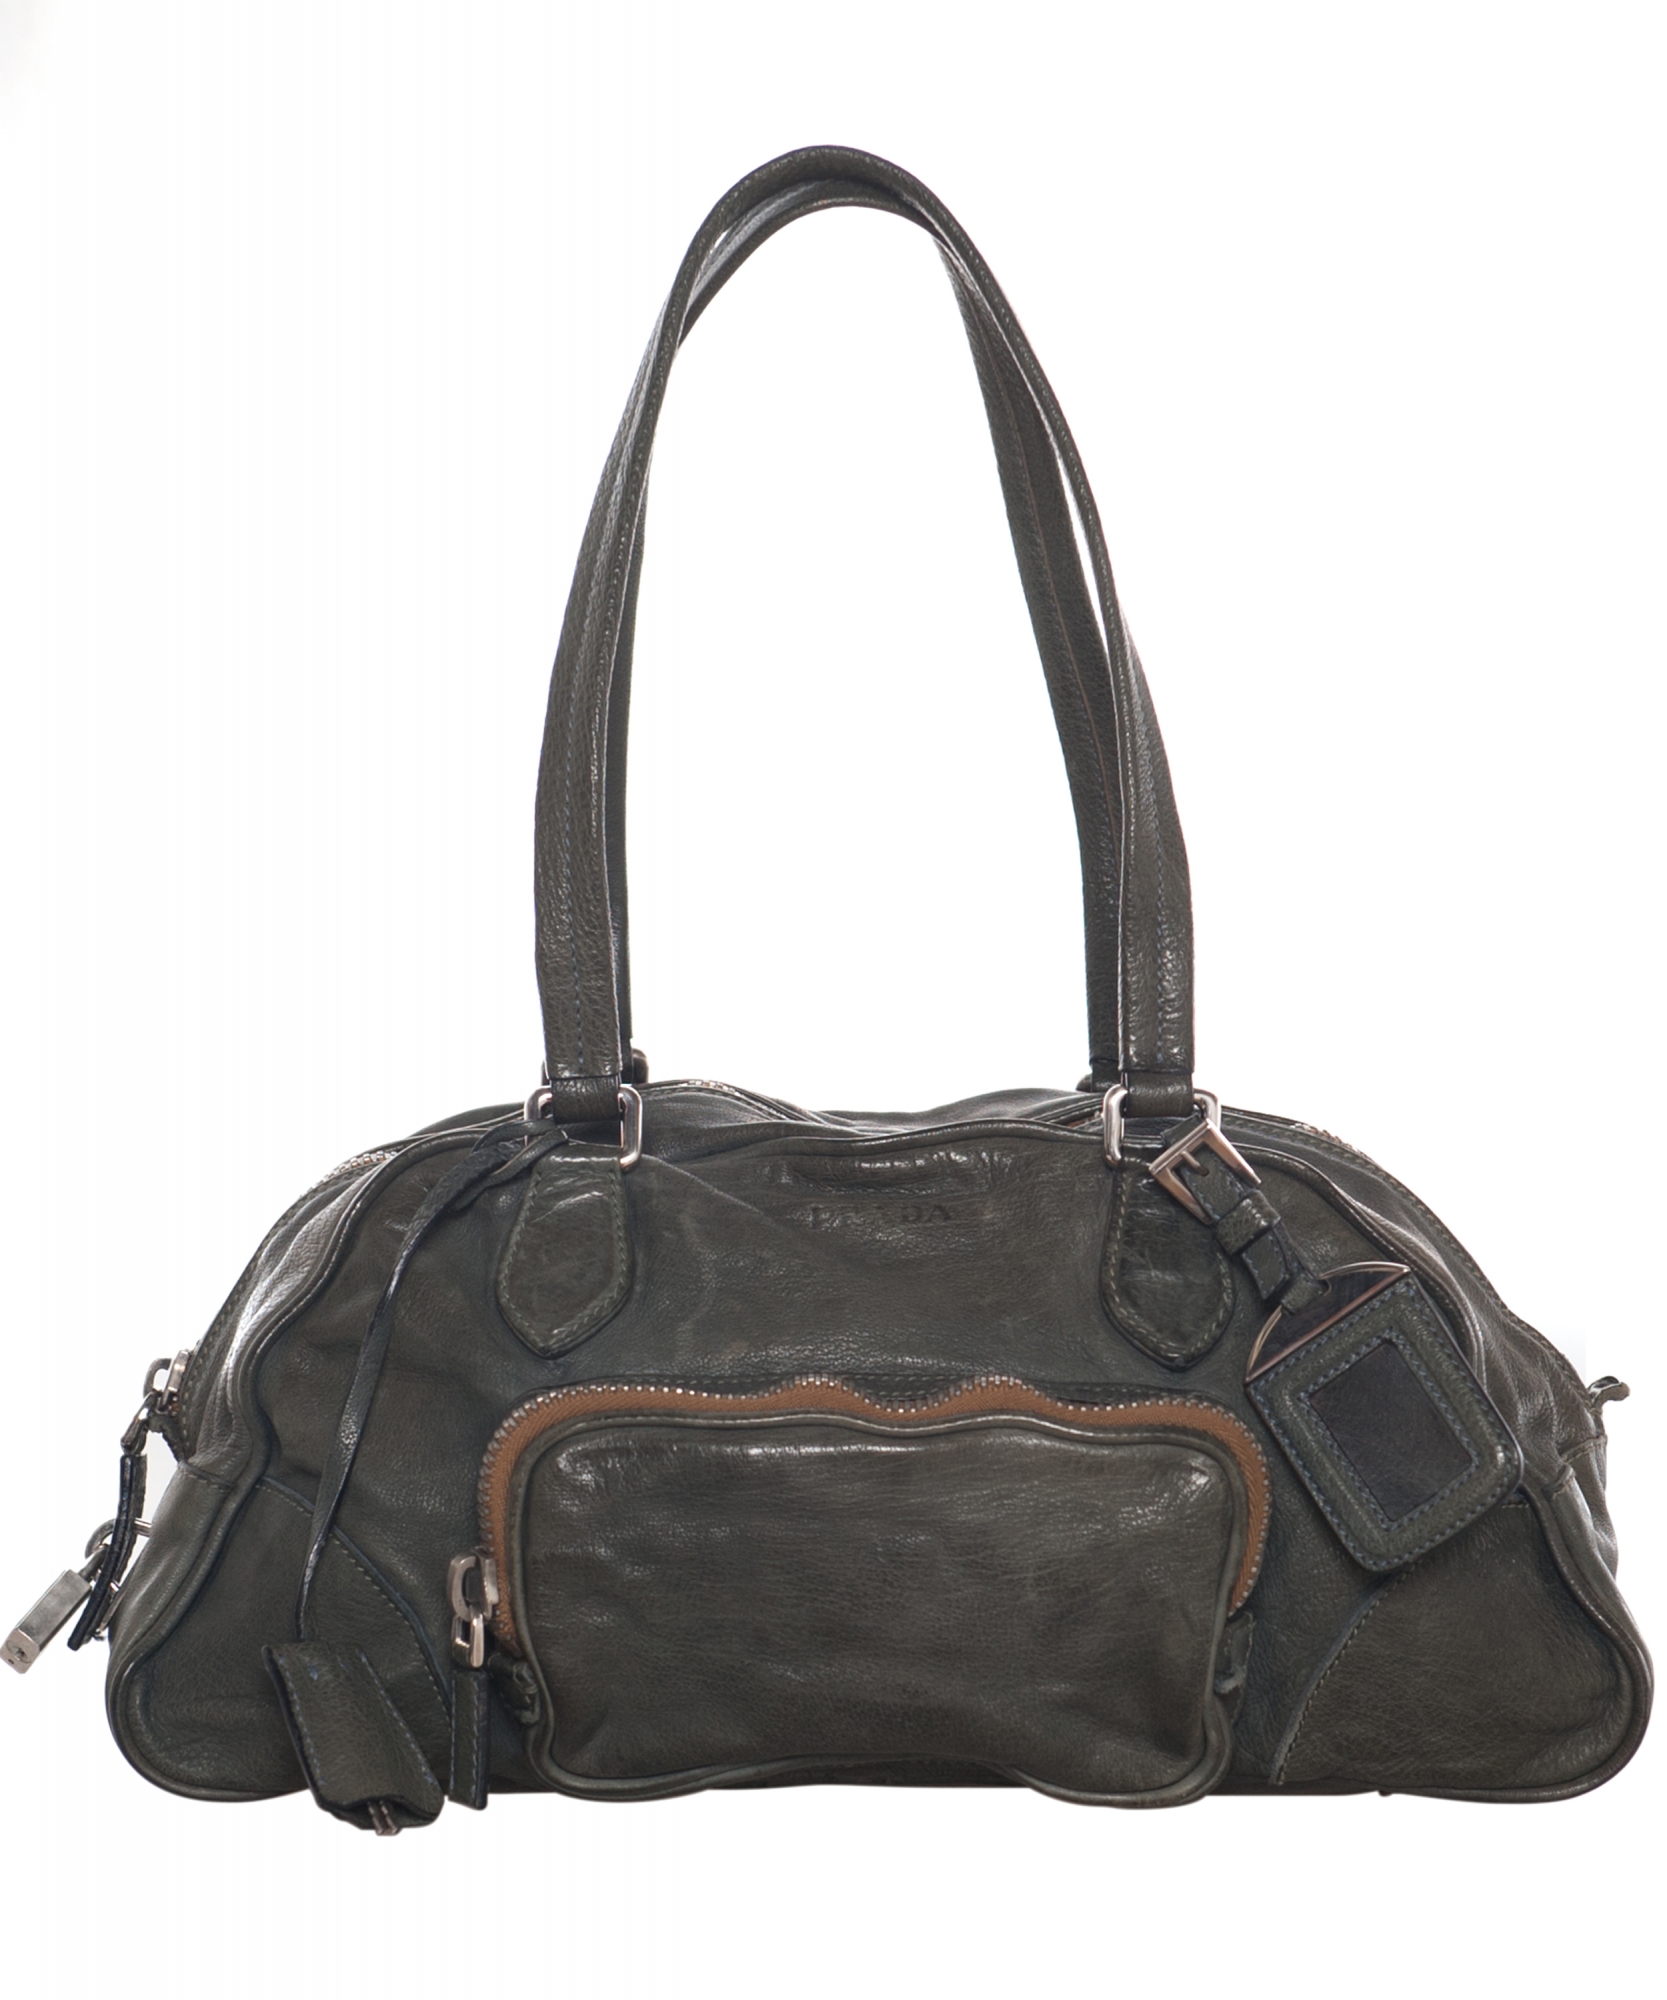 Prada Olive Green Leather Bowler Bag - Prada | La Doyenne